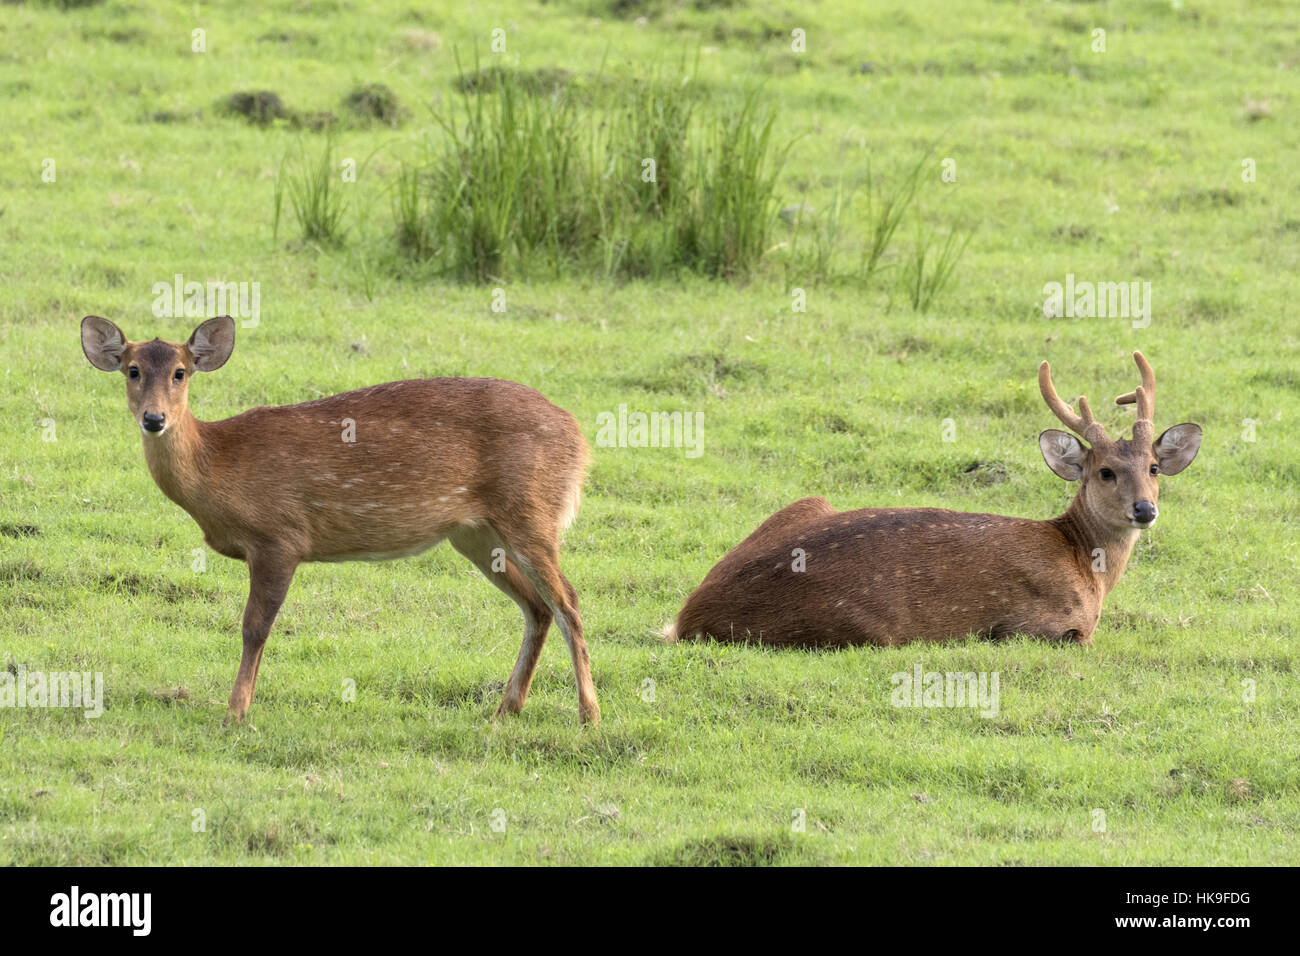 Hog deer (Axis porcinus), adult male and female in grassland, Kaziranga National Park, Assam, India, April Stock Photo